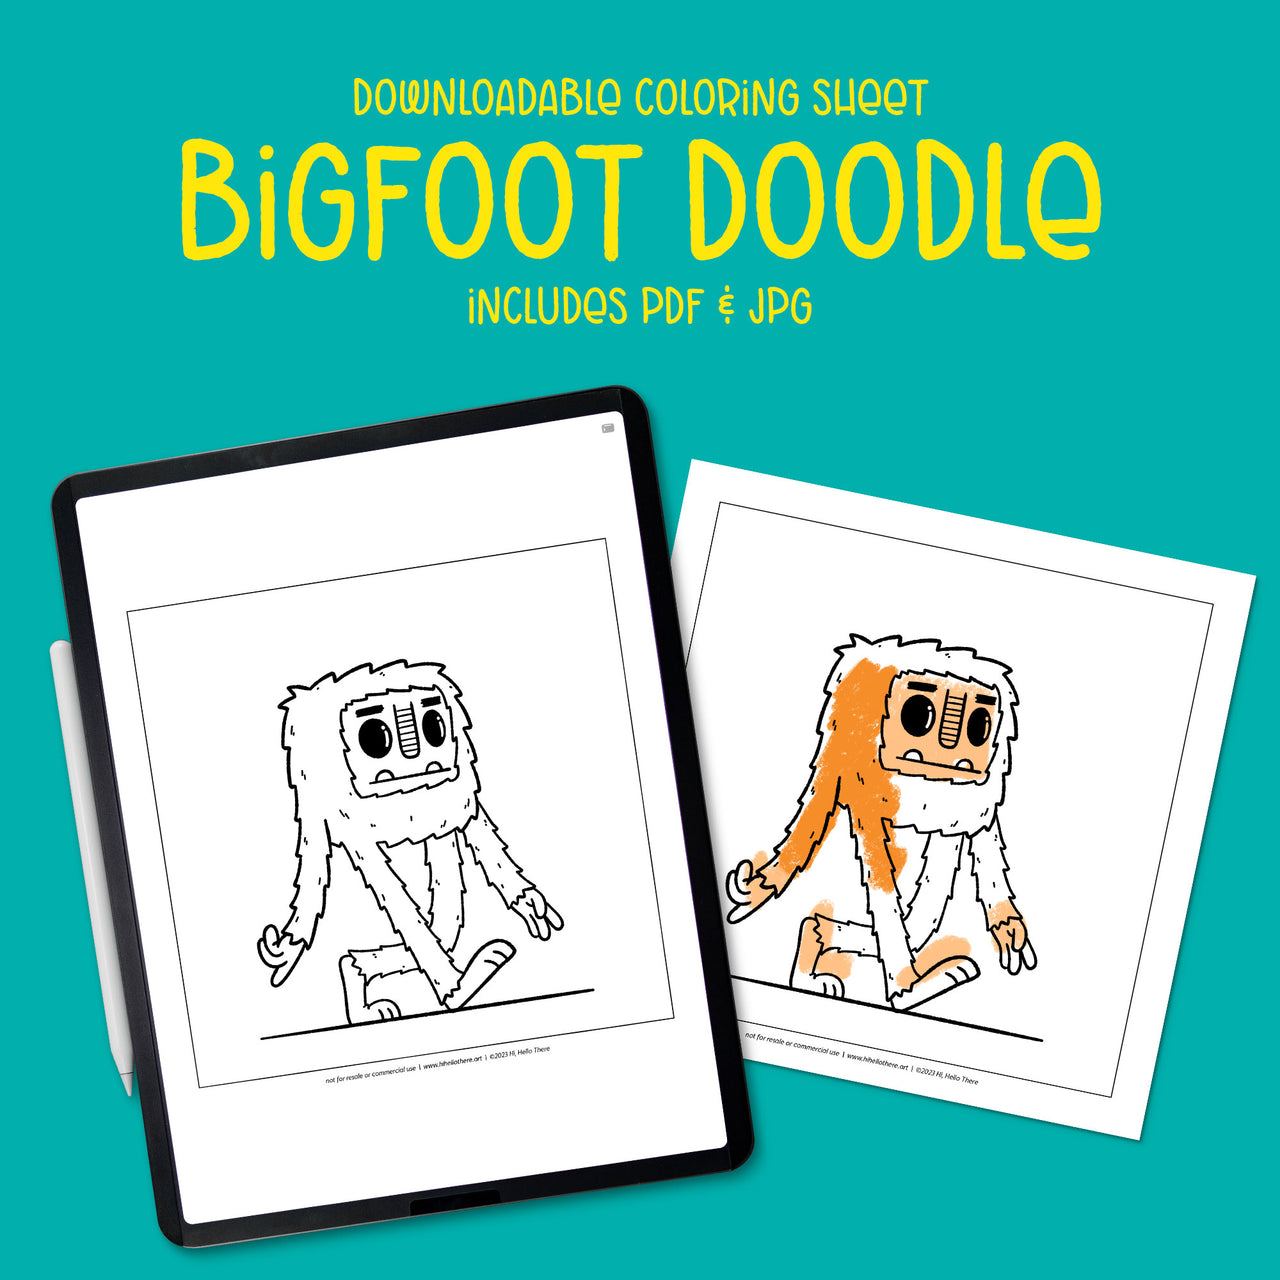 Bigfoot Doodle Downloadable Coloring Sheet